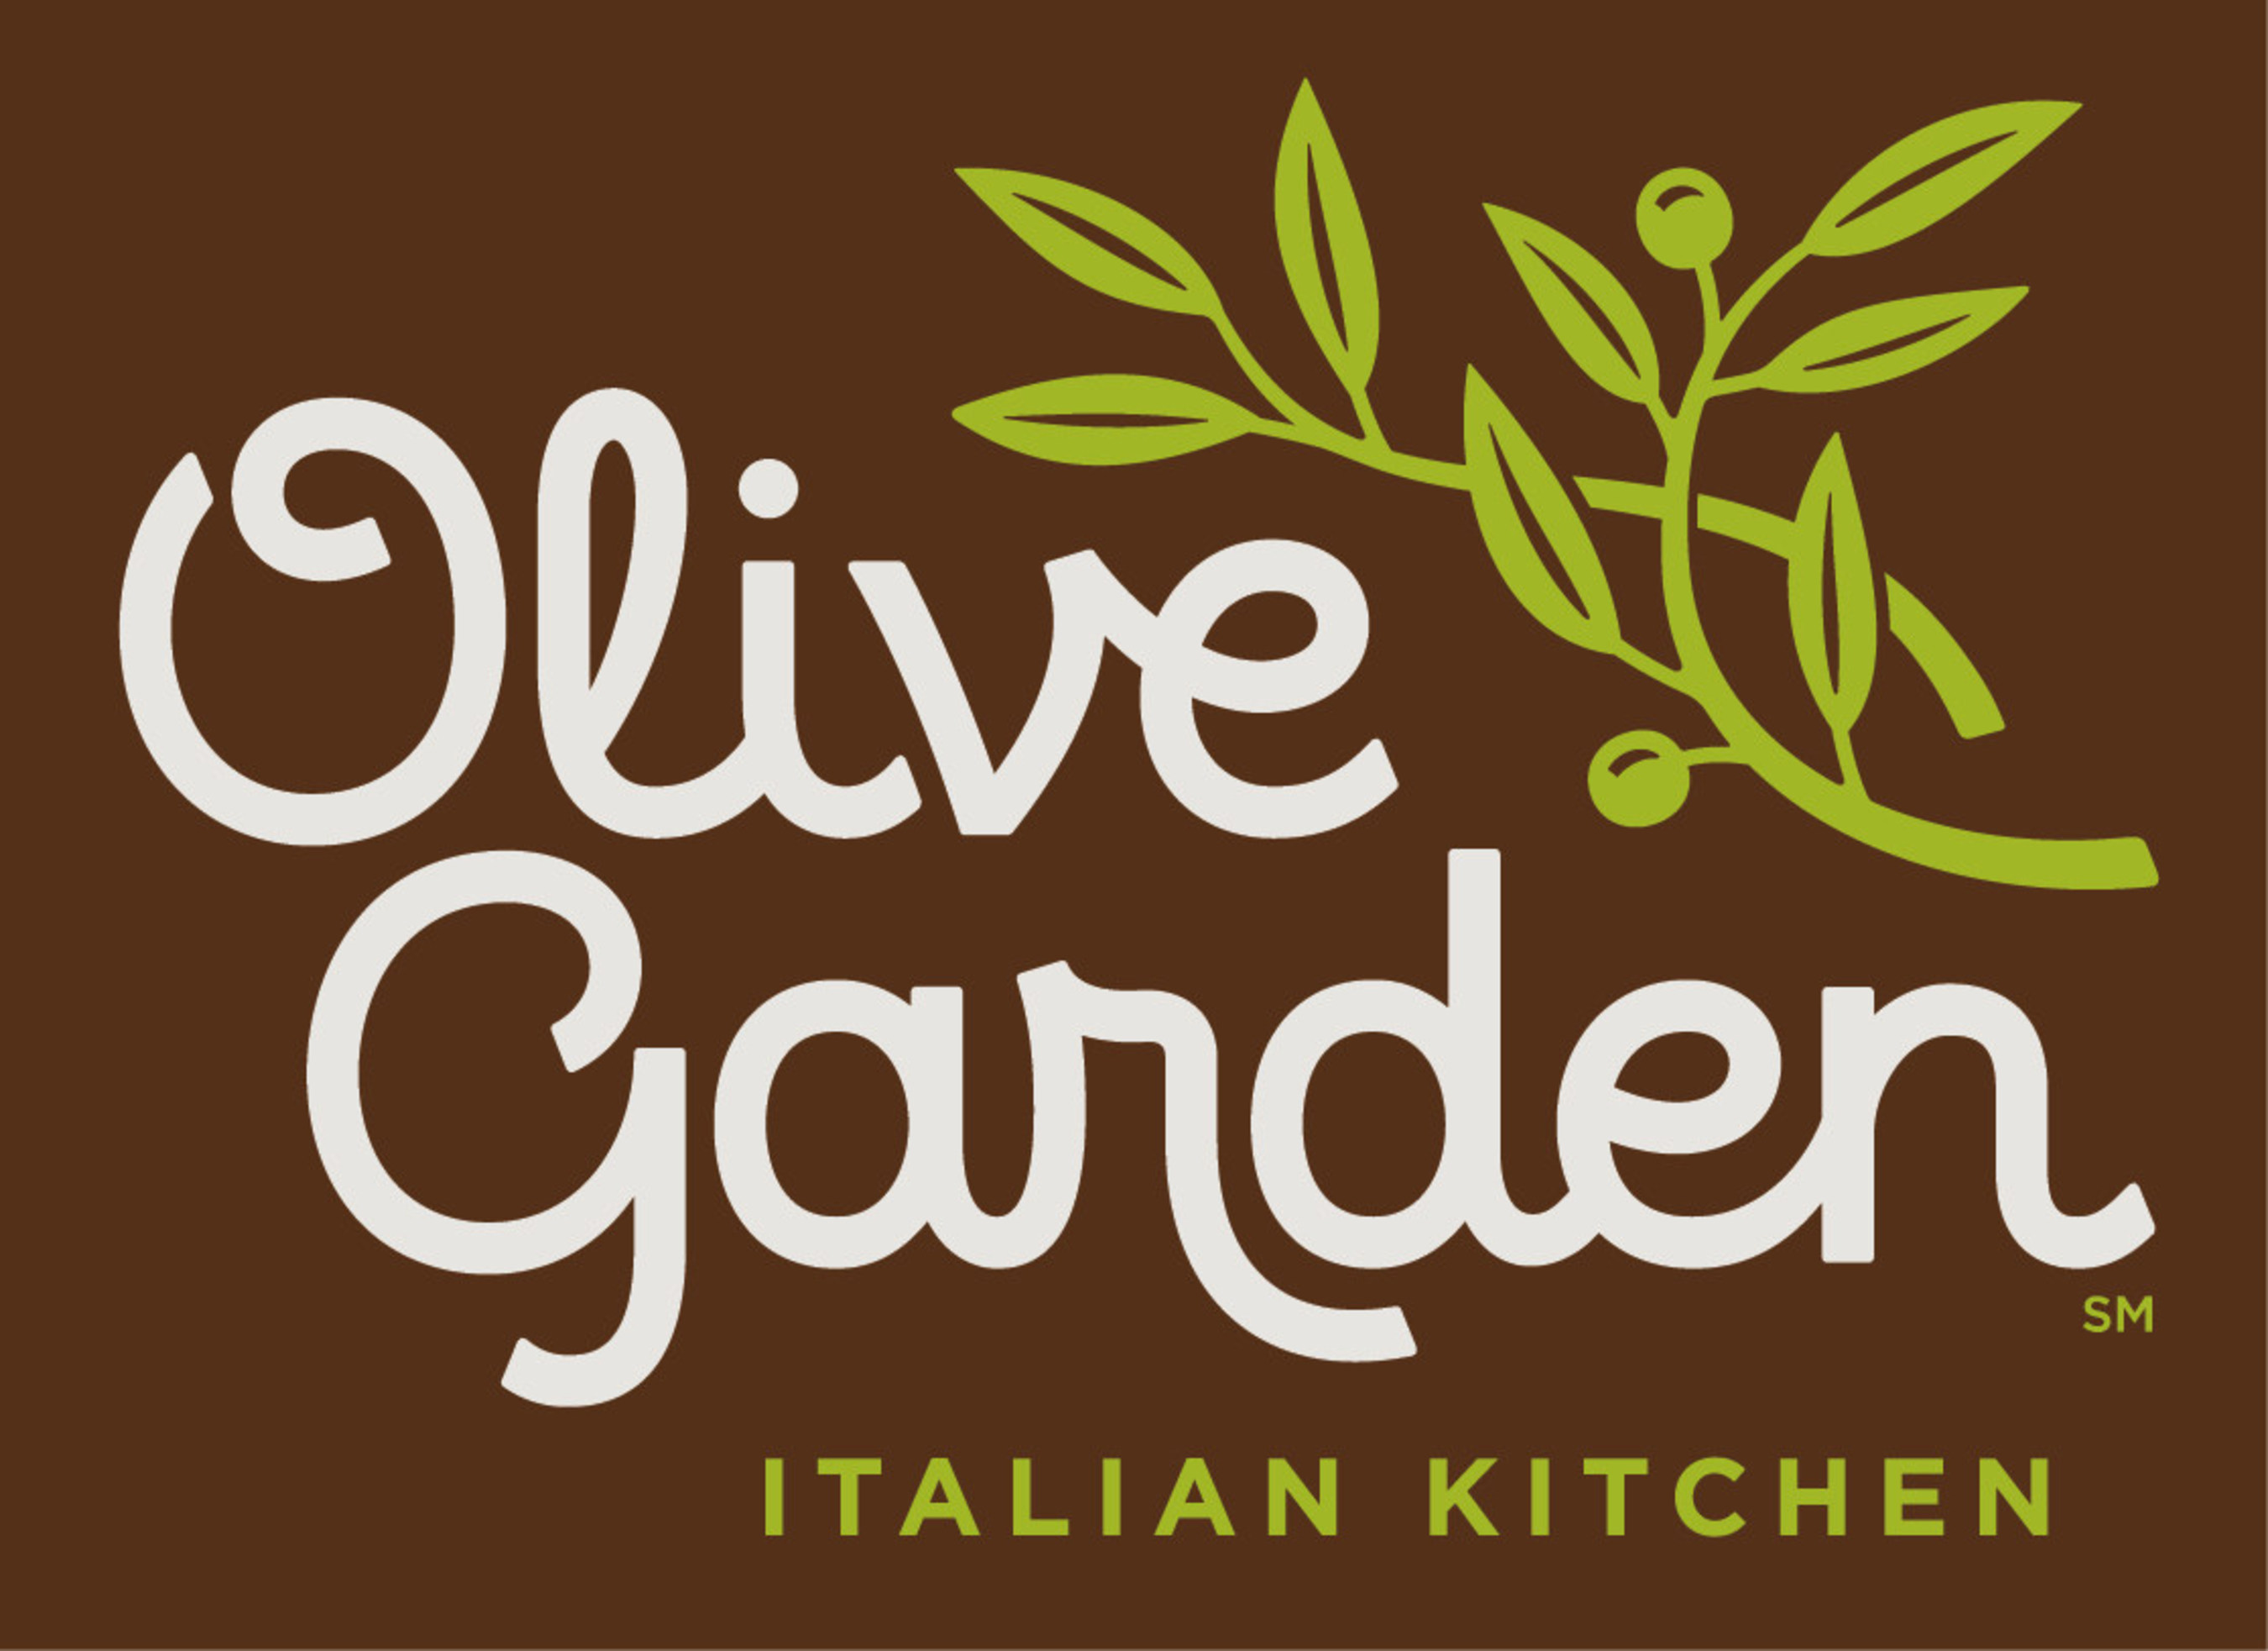 Lasagna Classico Olive Garden Review